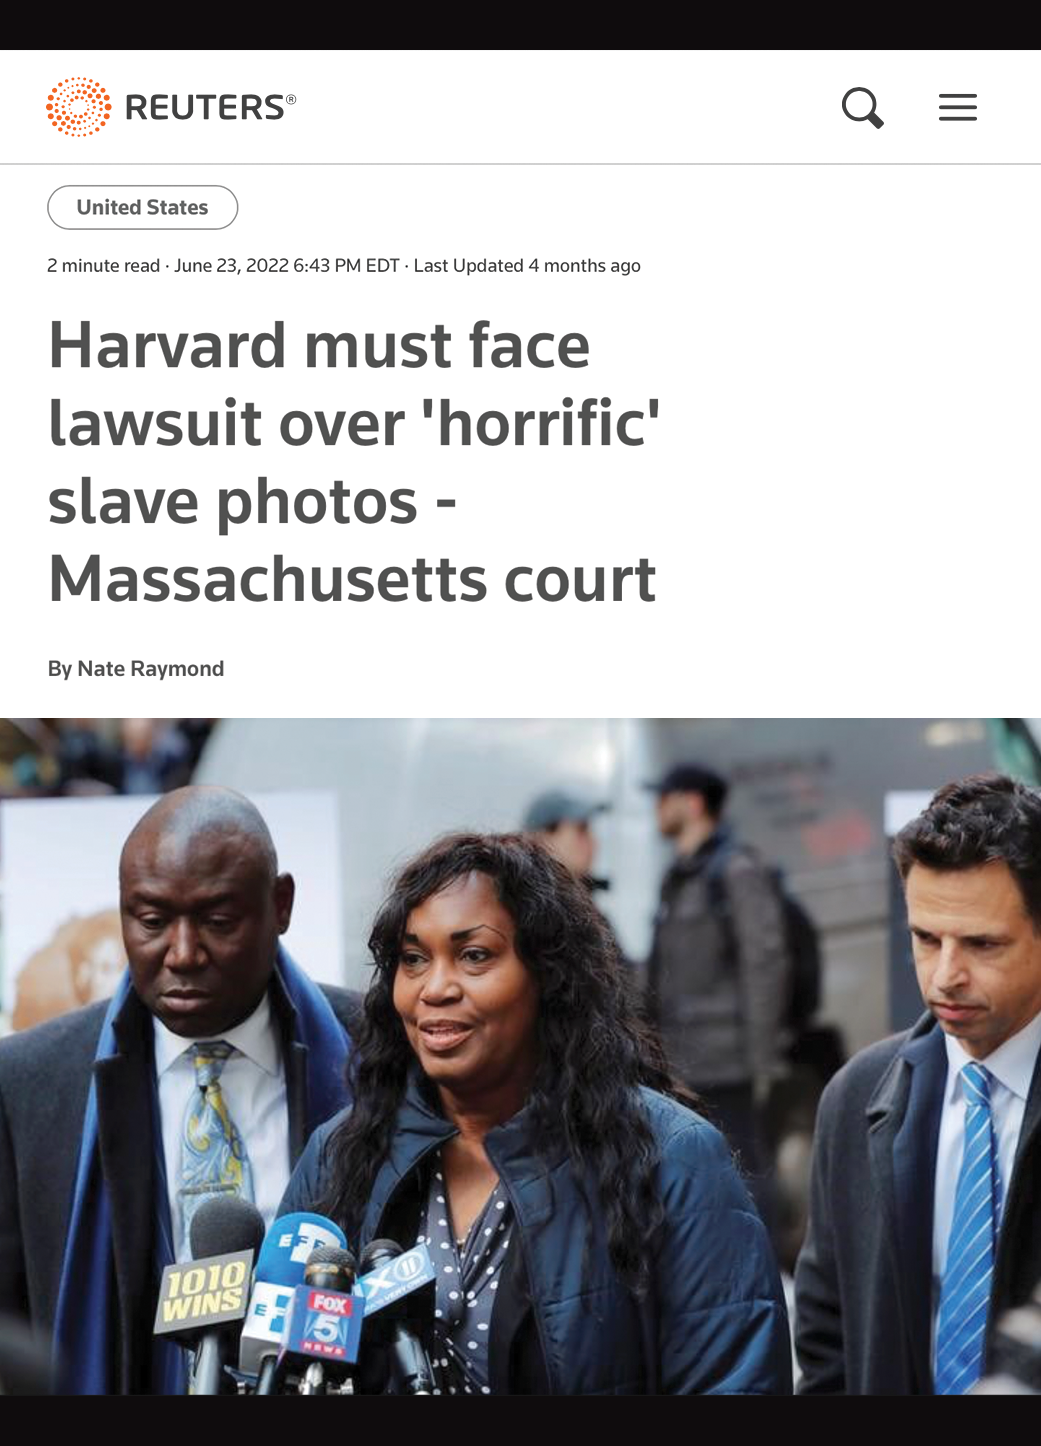 Reuters article highlighting Harvard lawsuit.